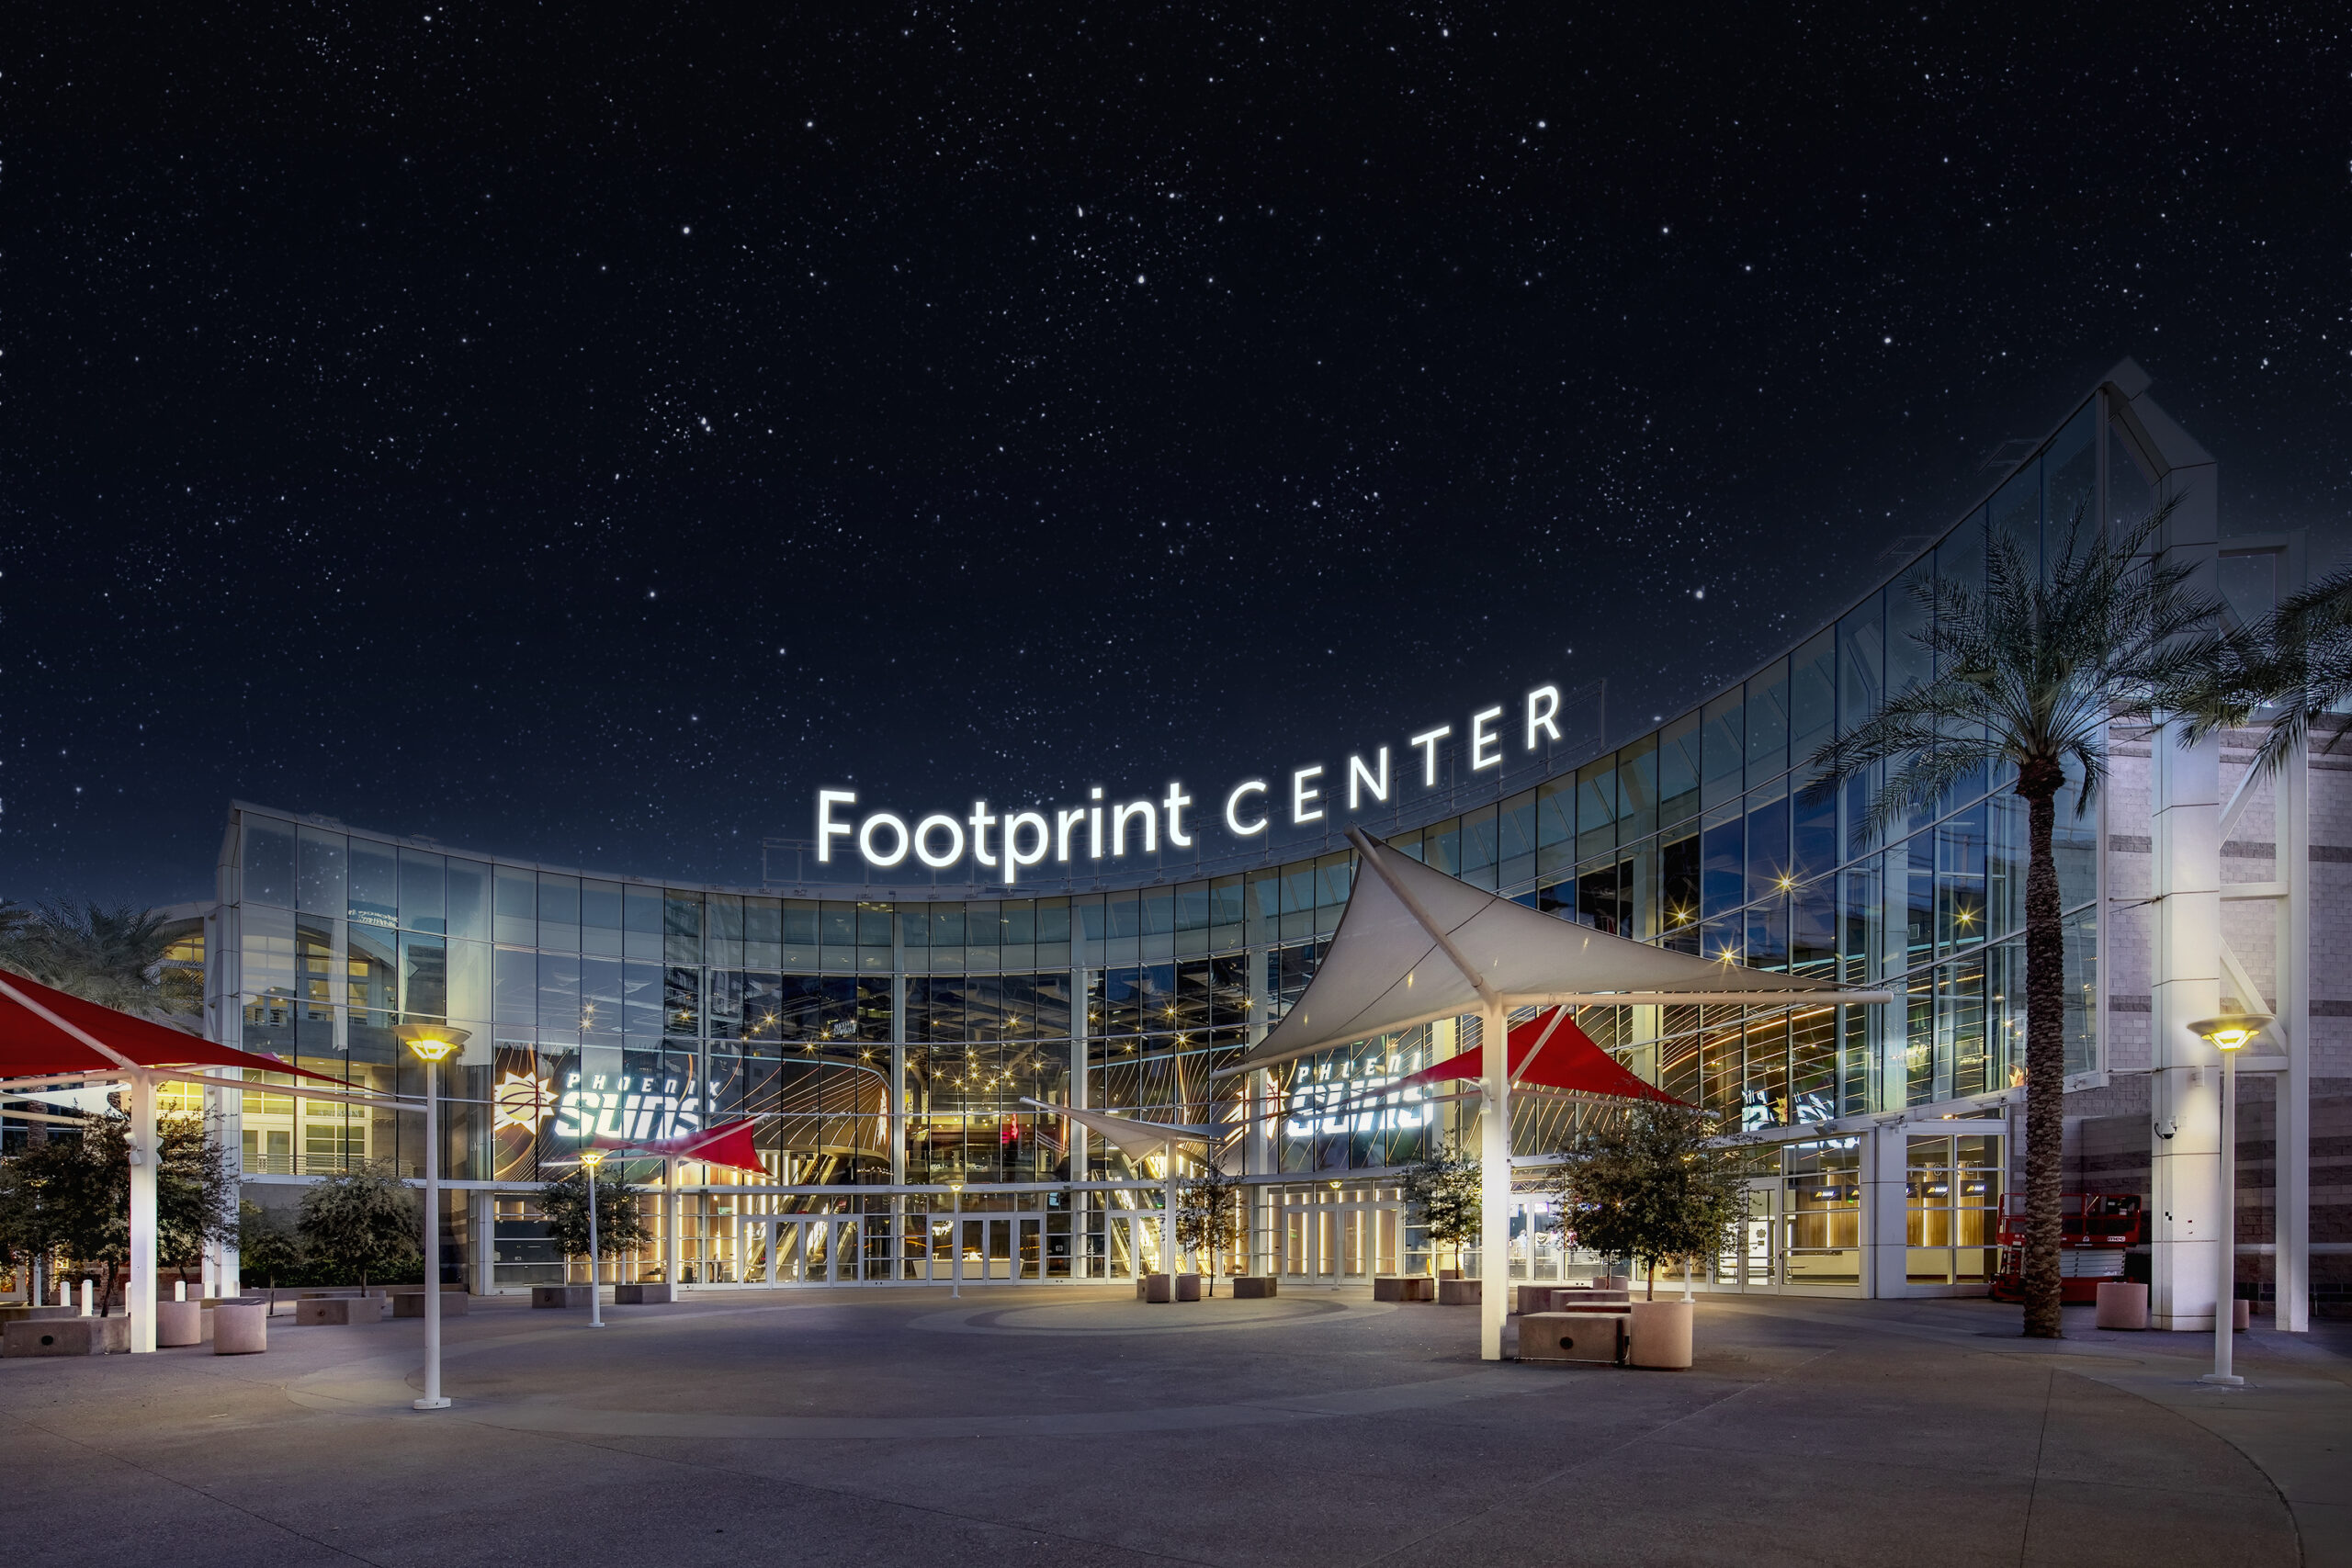 Phoenix Suns Arena now called Footprint Center